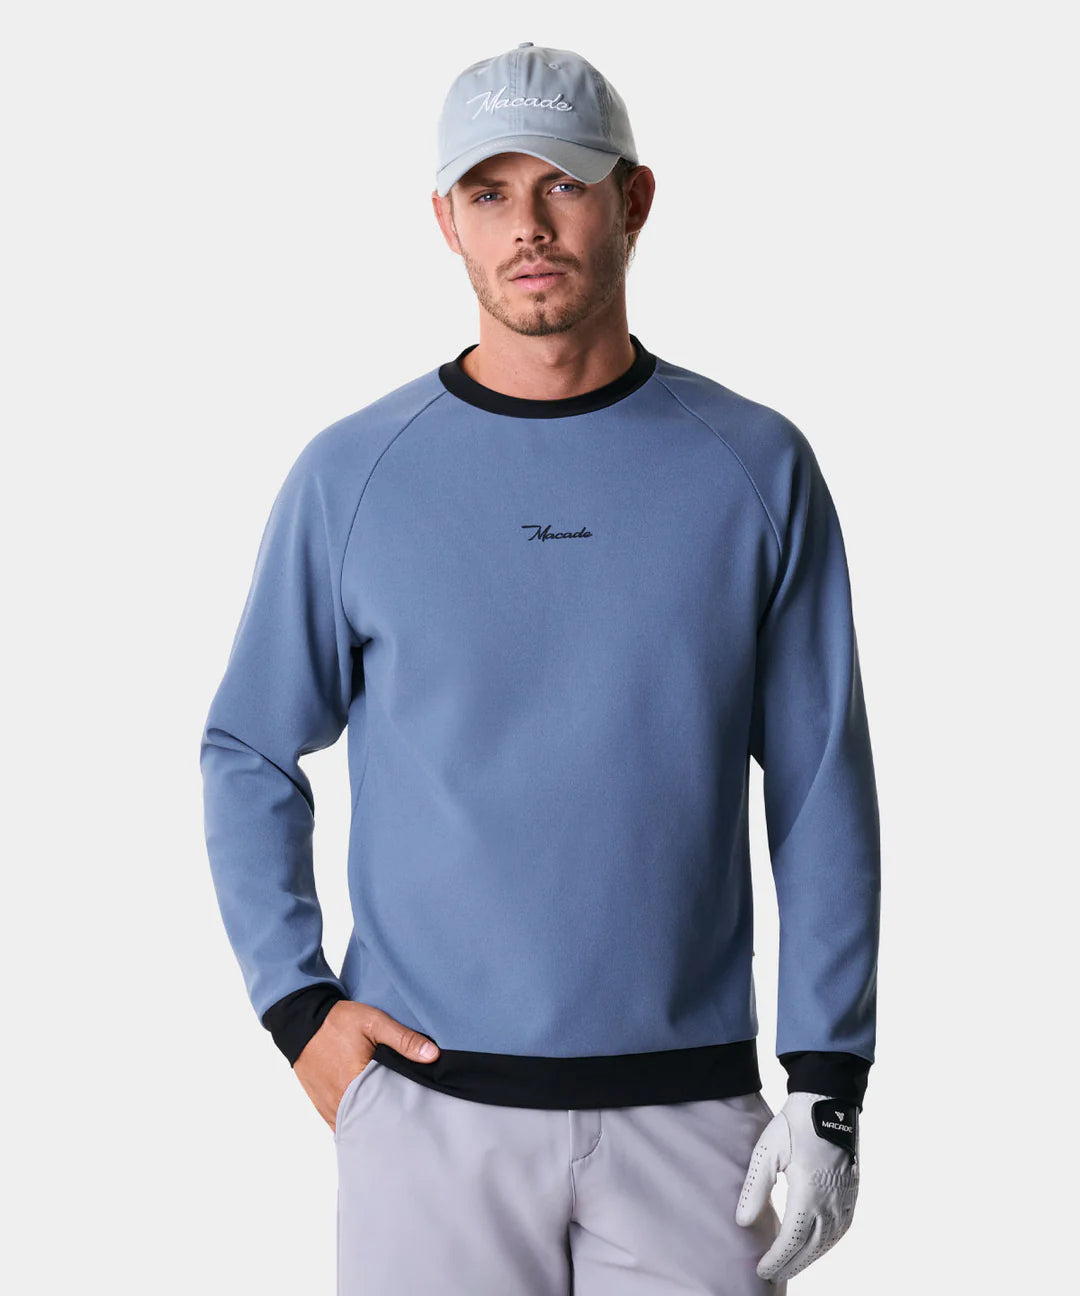 Macade Tech Sweatshirt